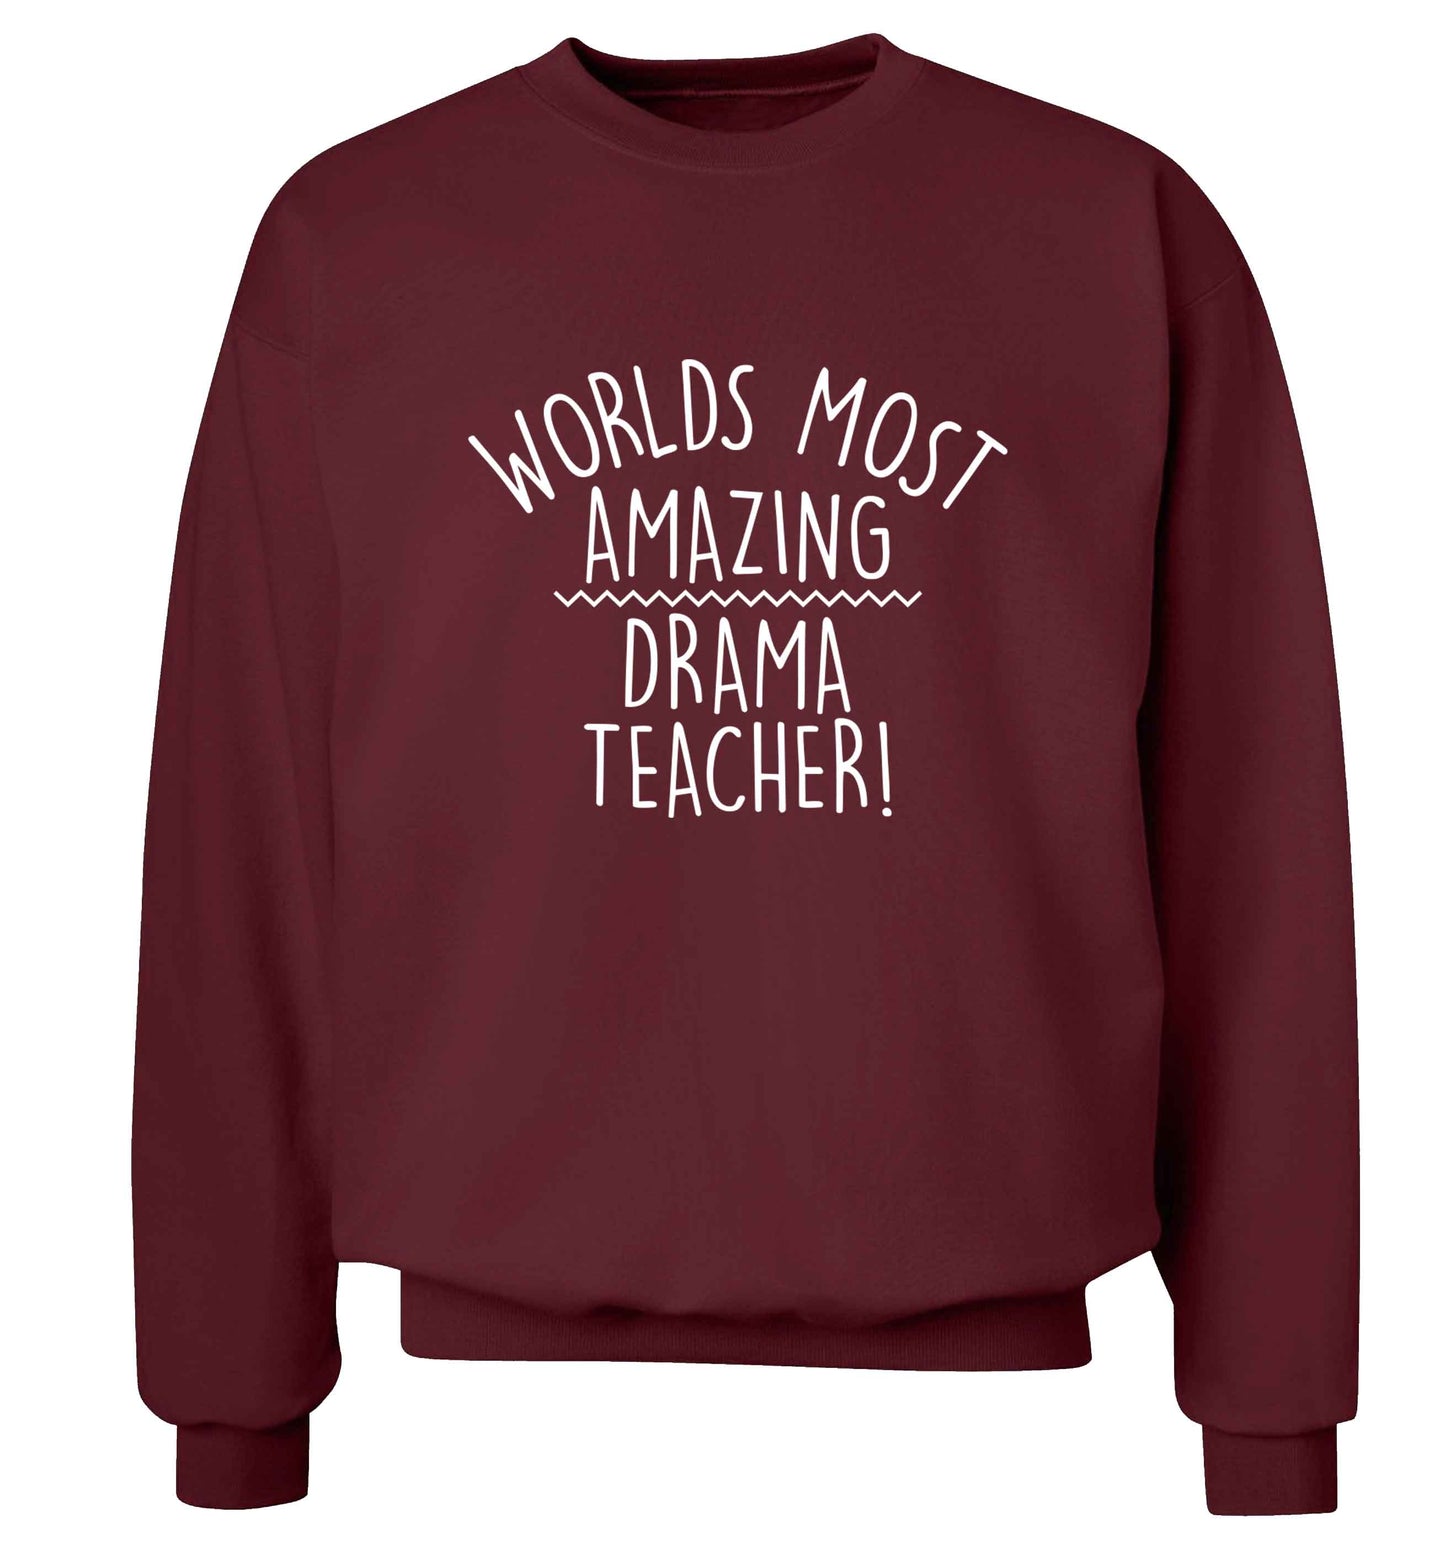 Worlds most amazing drama teacher adult's unisex maroon sweater 2XL